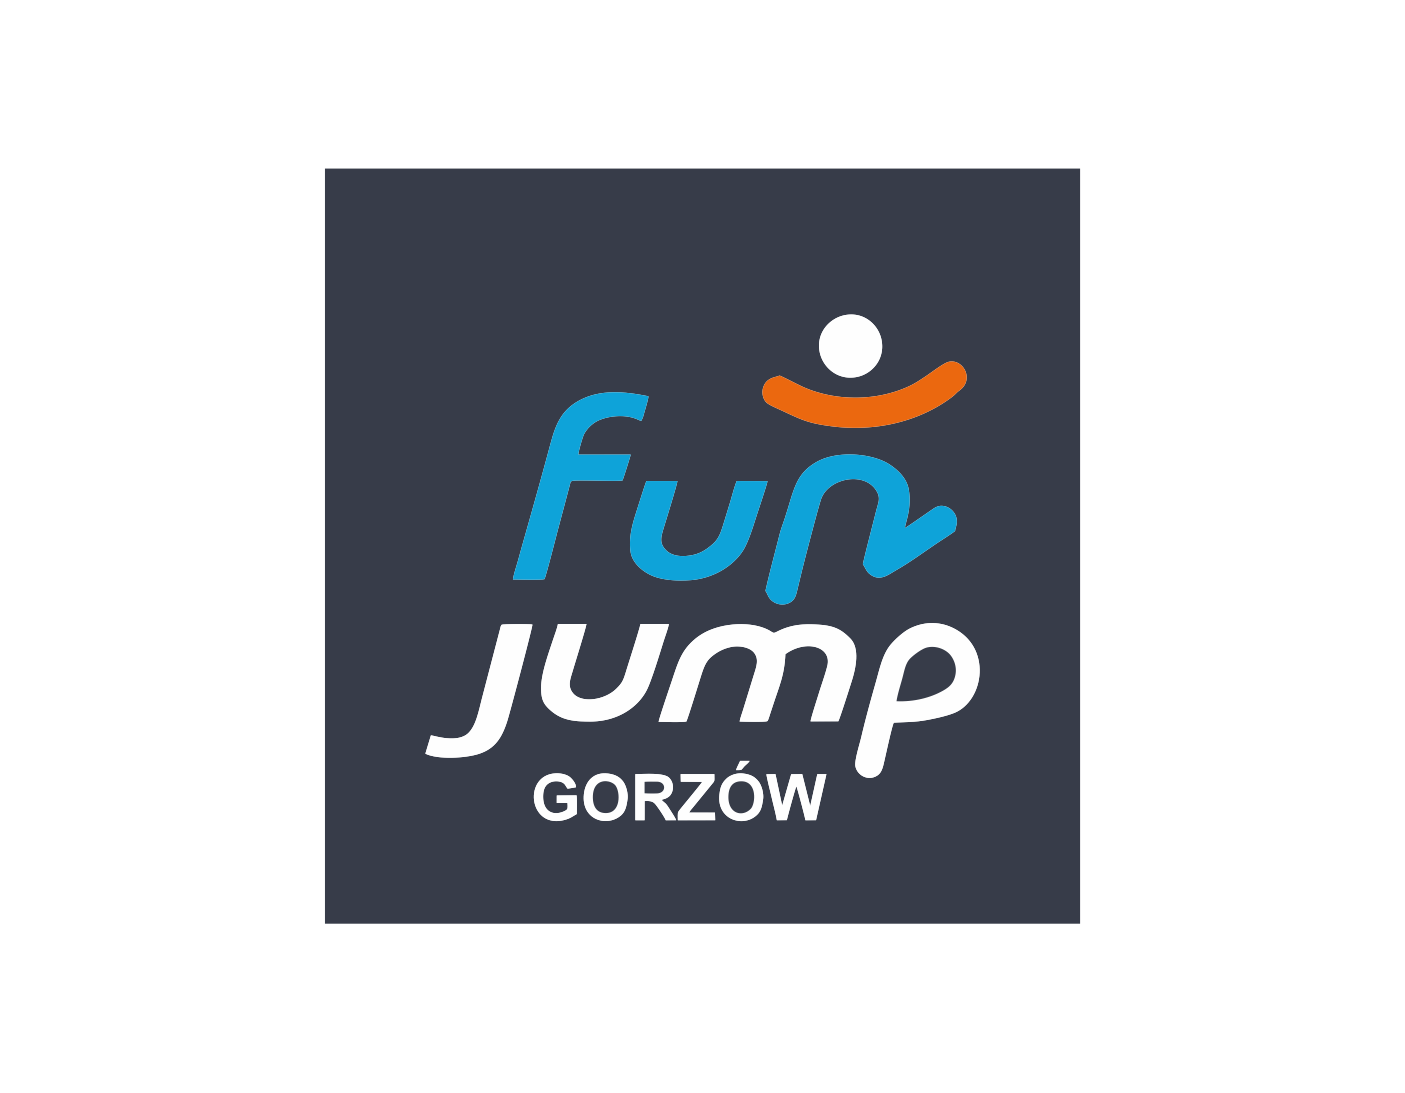 Fun Jump